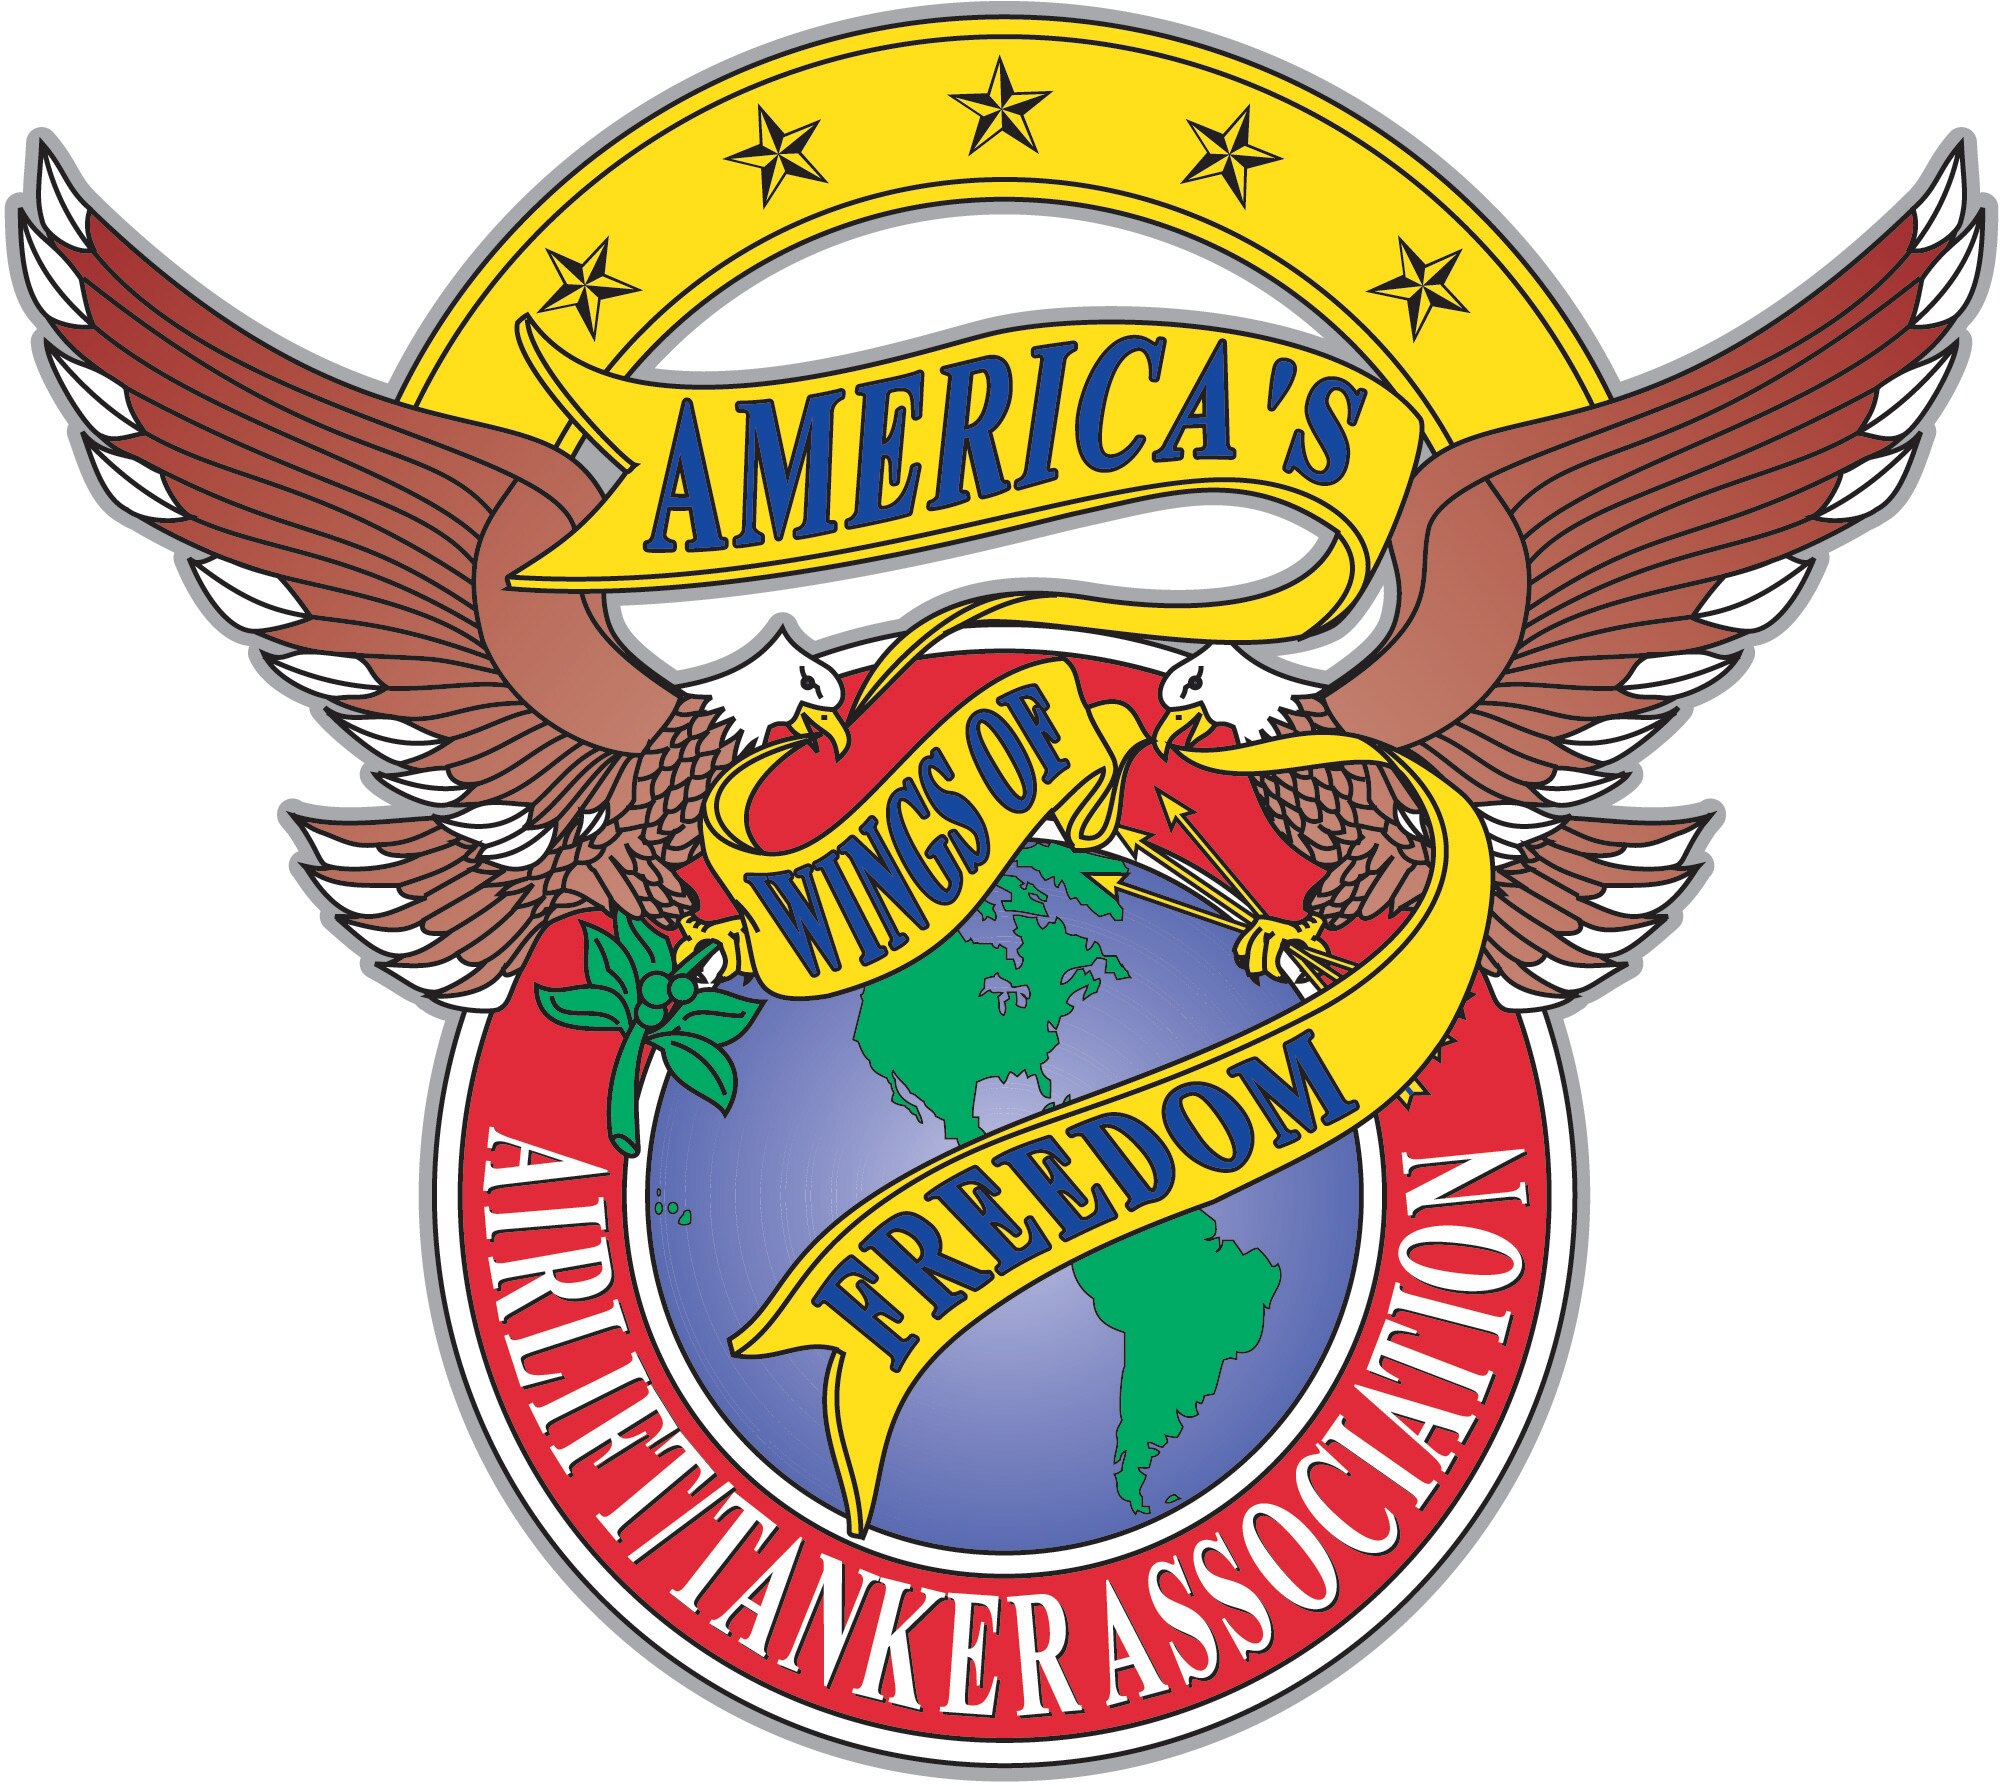 Fairchild preps for ATA convention > Fairchild Air Force Base > Article